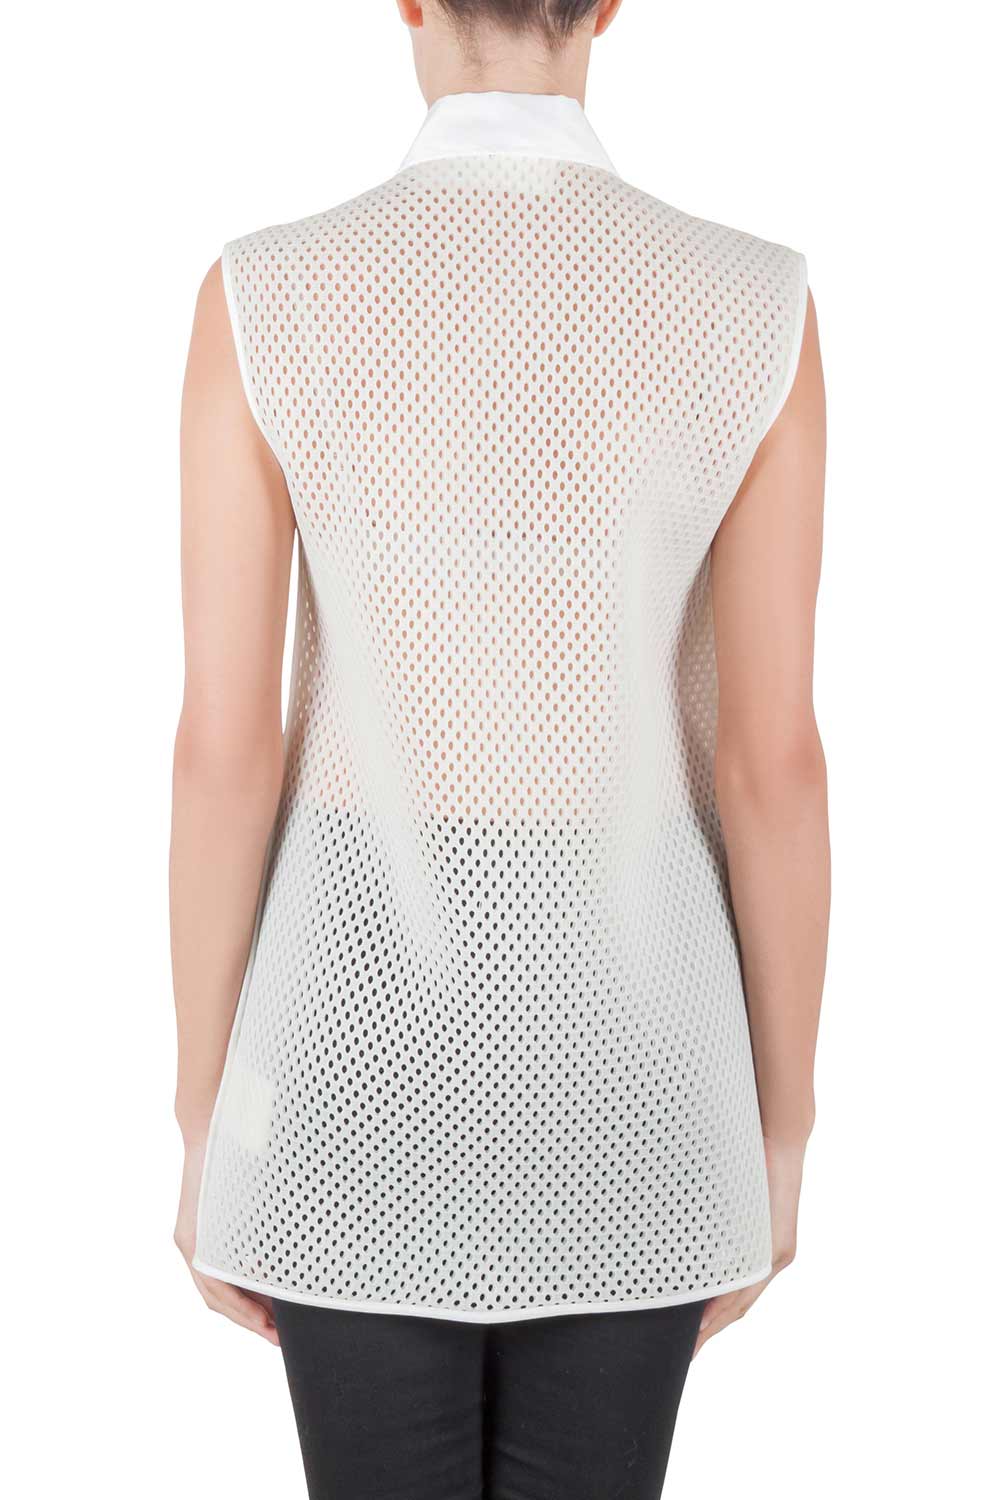 Acne Studios White Perforated Mesh Sleeveless Adelia Shirt M